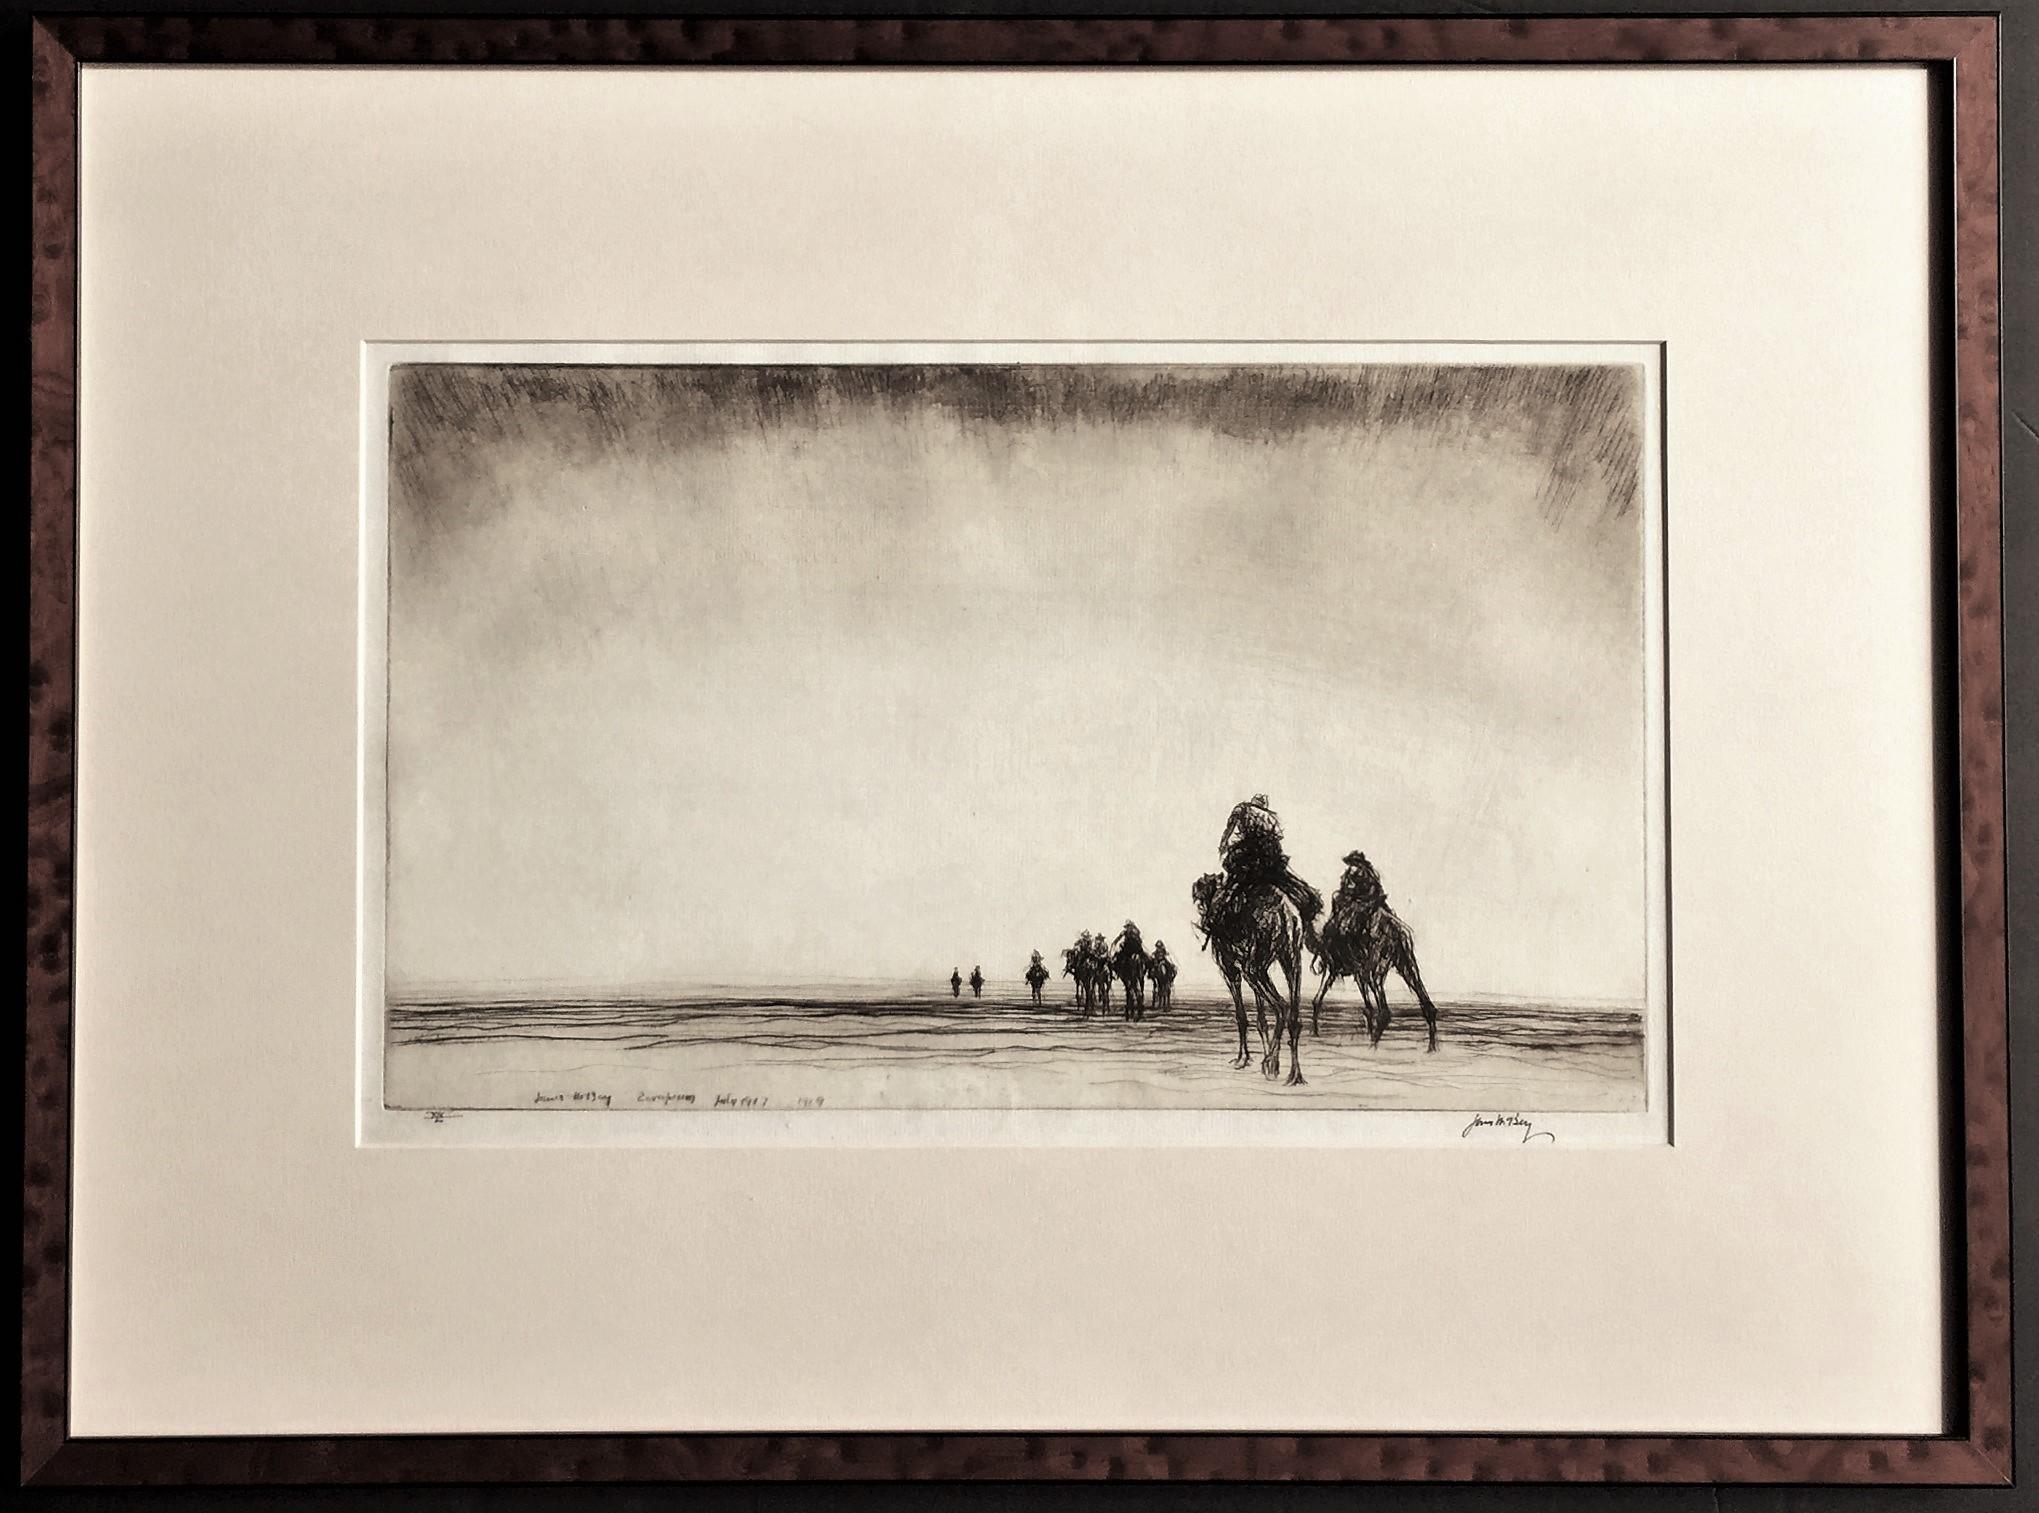 Dawn. The Camel Patrol Setting Out. - Modern Print by James McBey.